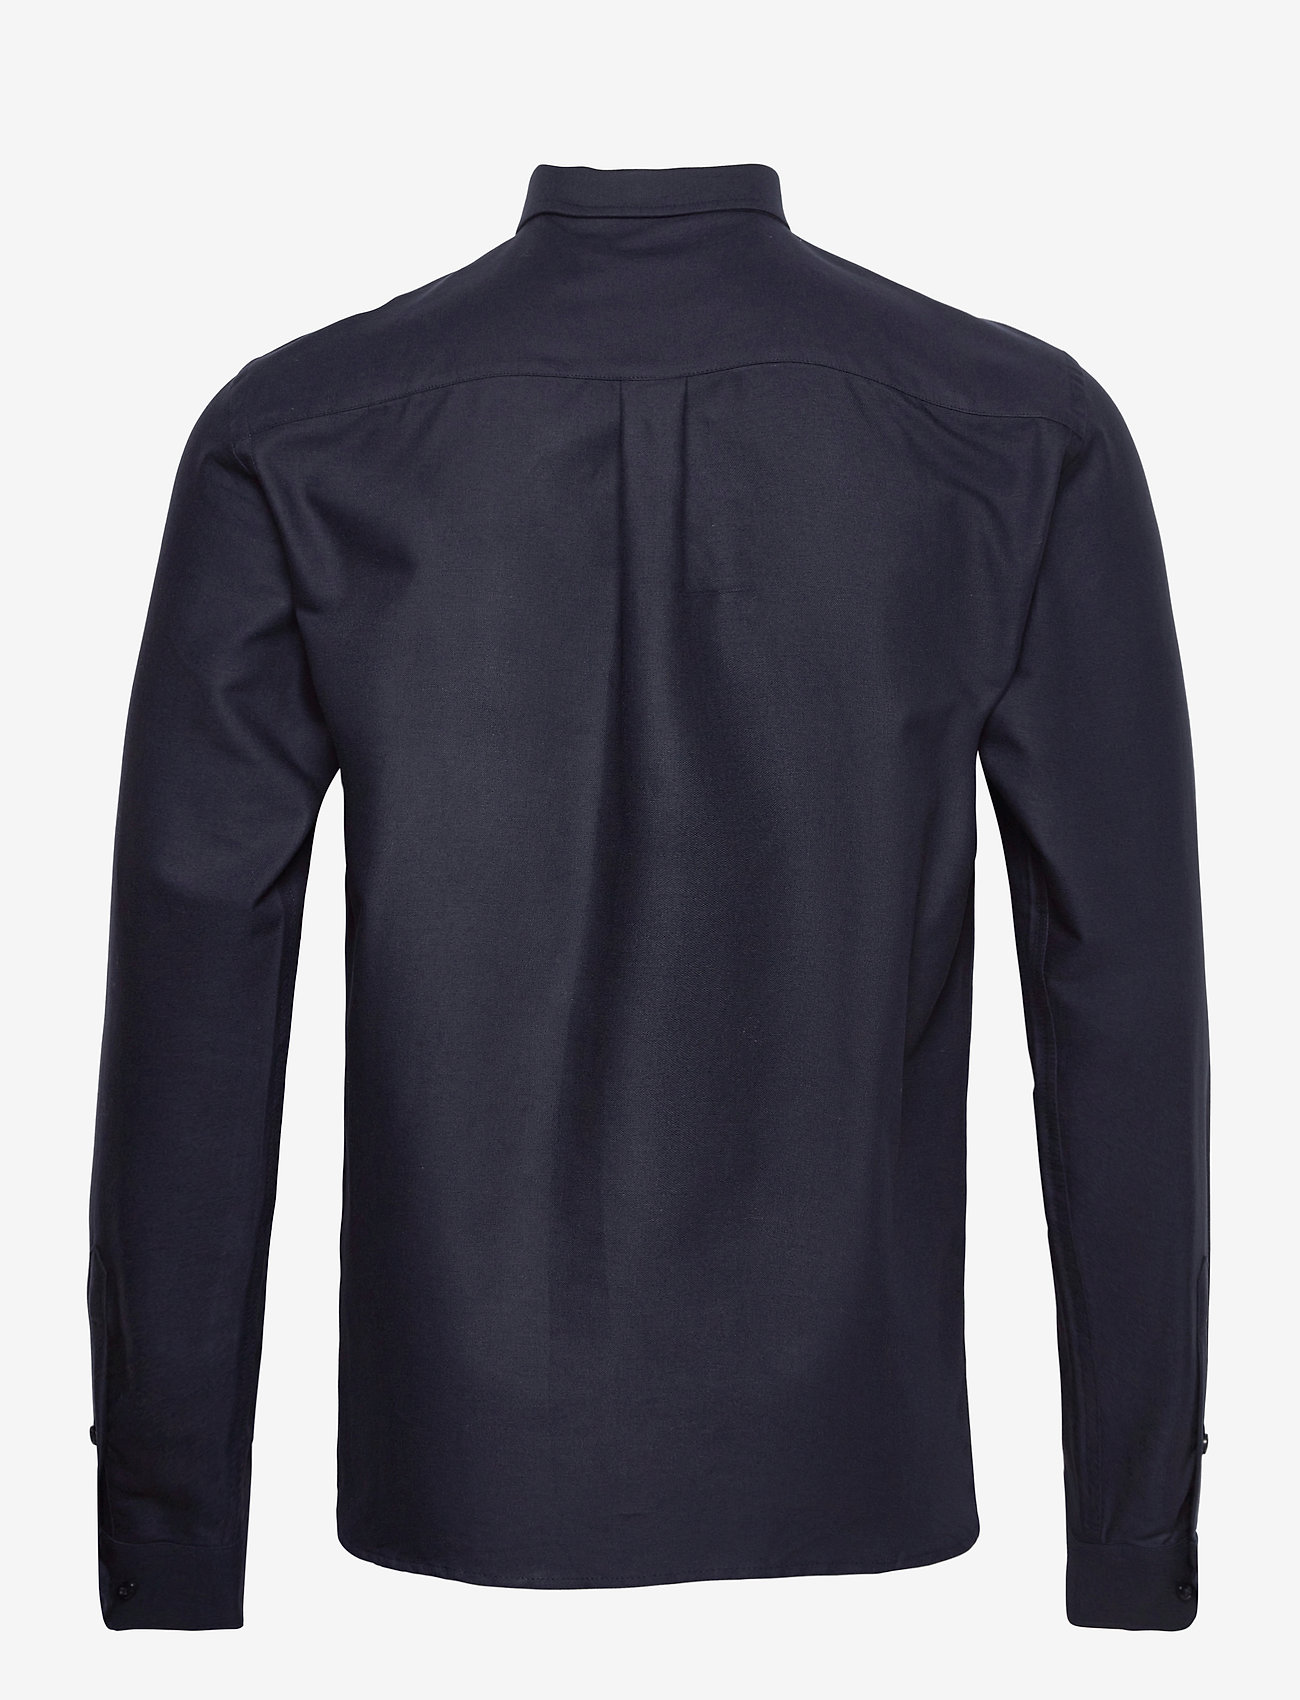 Les Deux Christoph Oxford Shirt (Dark Navy) - 594.15 kr | Boozt.com